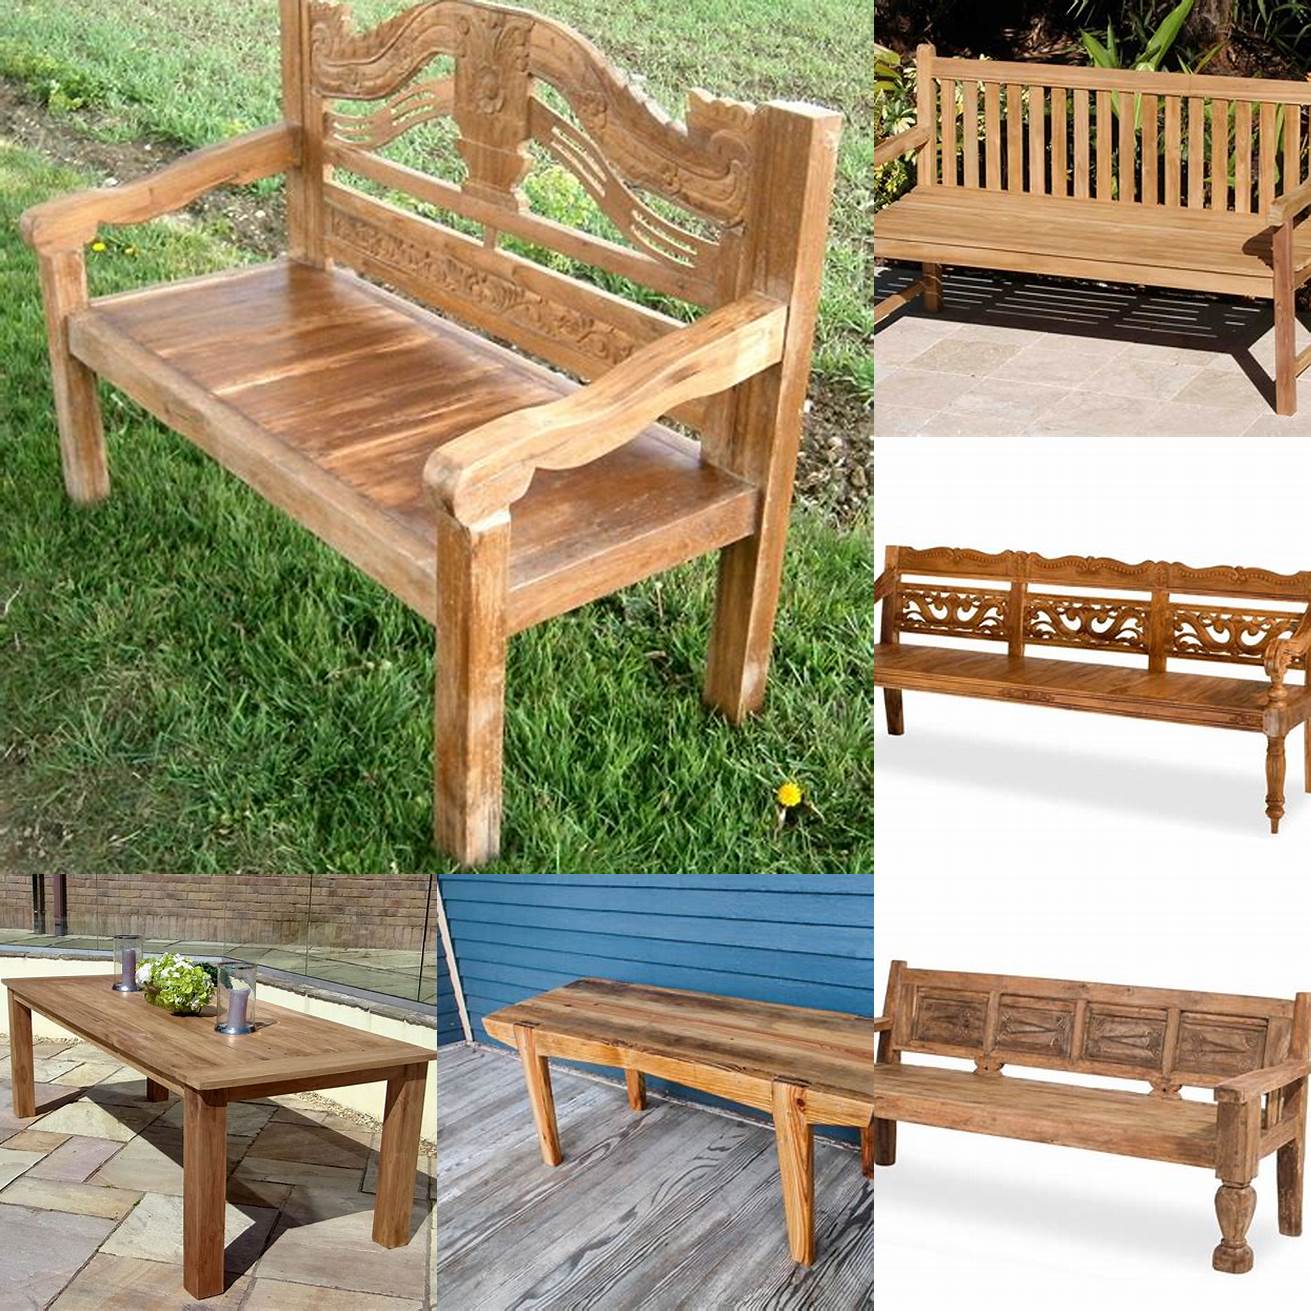 Reclaimed teak wood bench